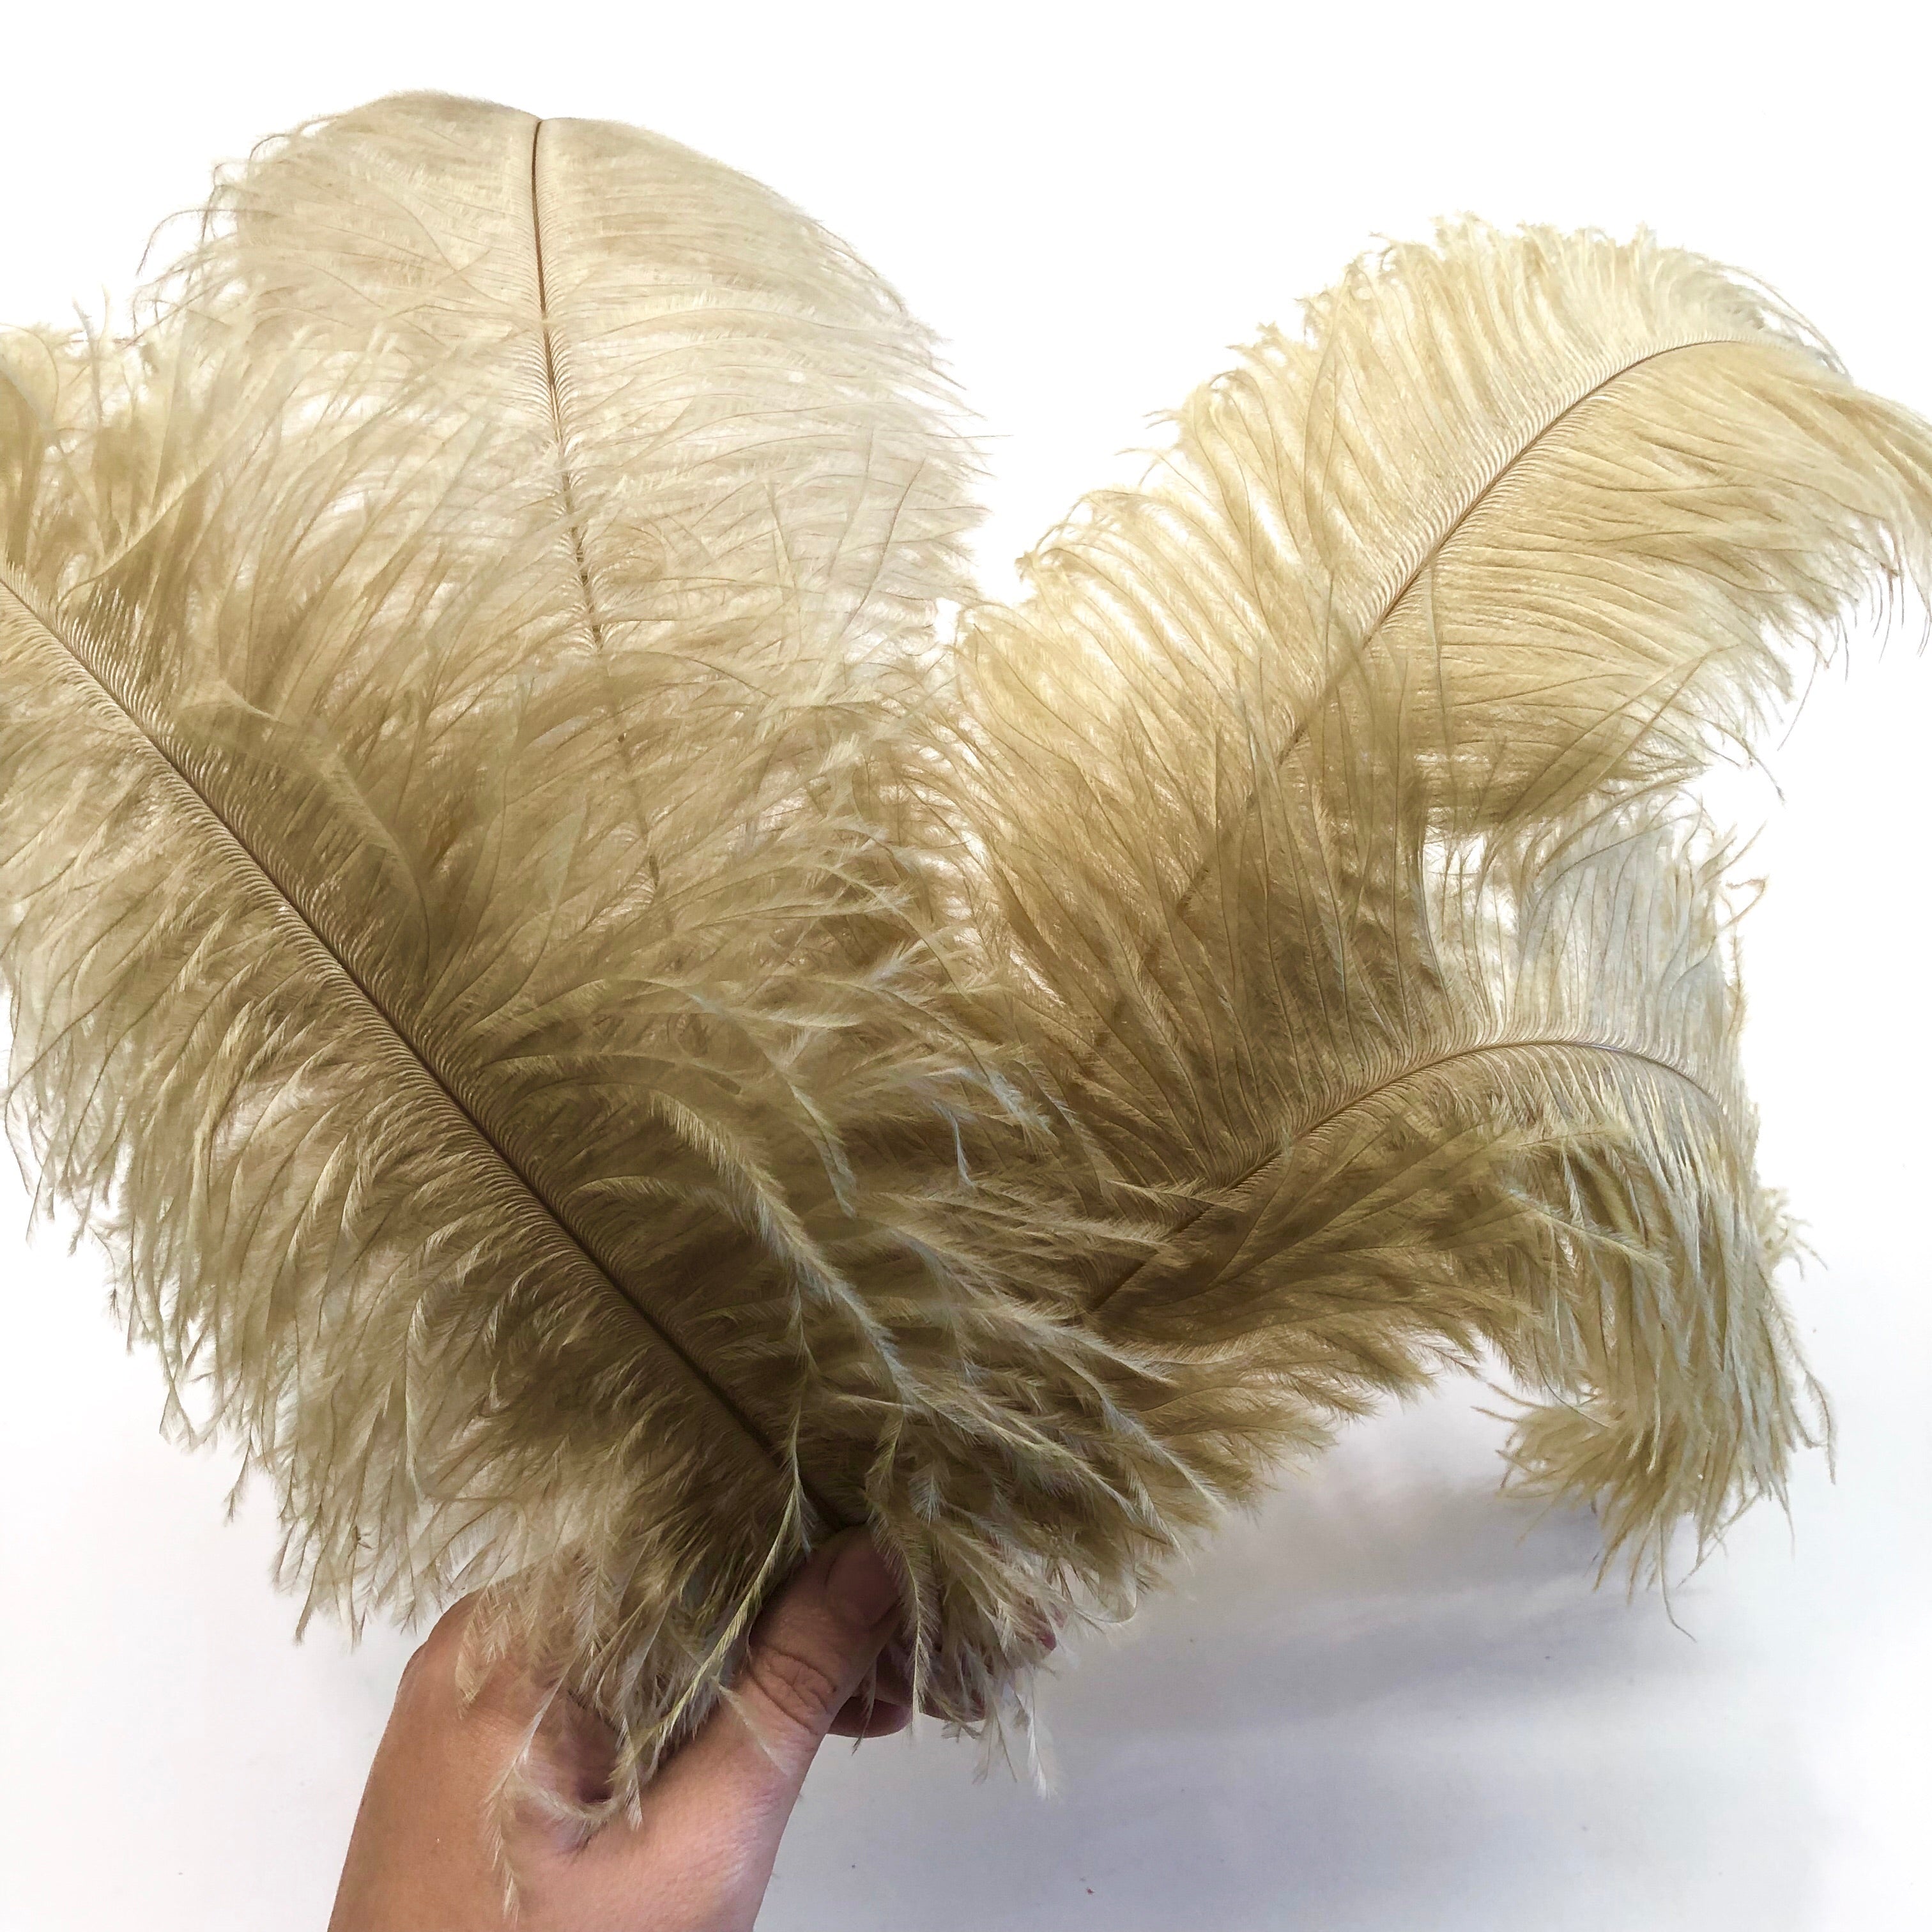 Ostrich Blondine Feather 25-40cm - Gold